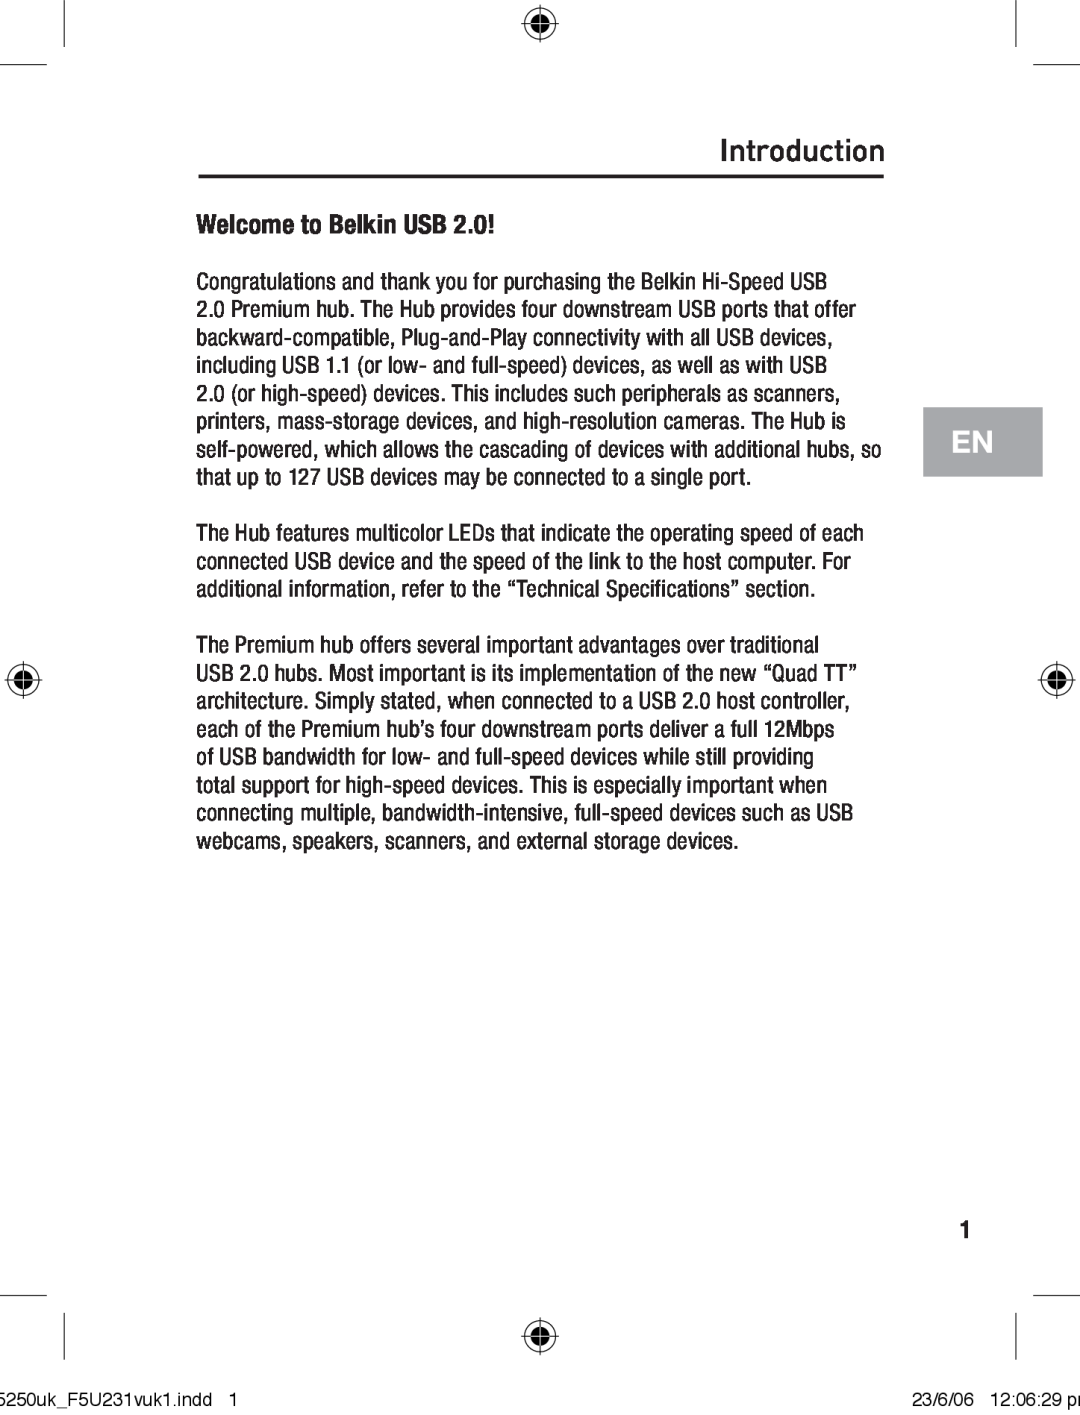 Belkin F5U231VUKI user manual Introduction, Welcome to Belkin USB 